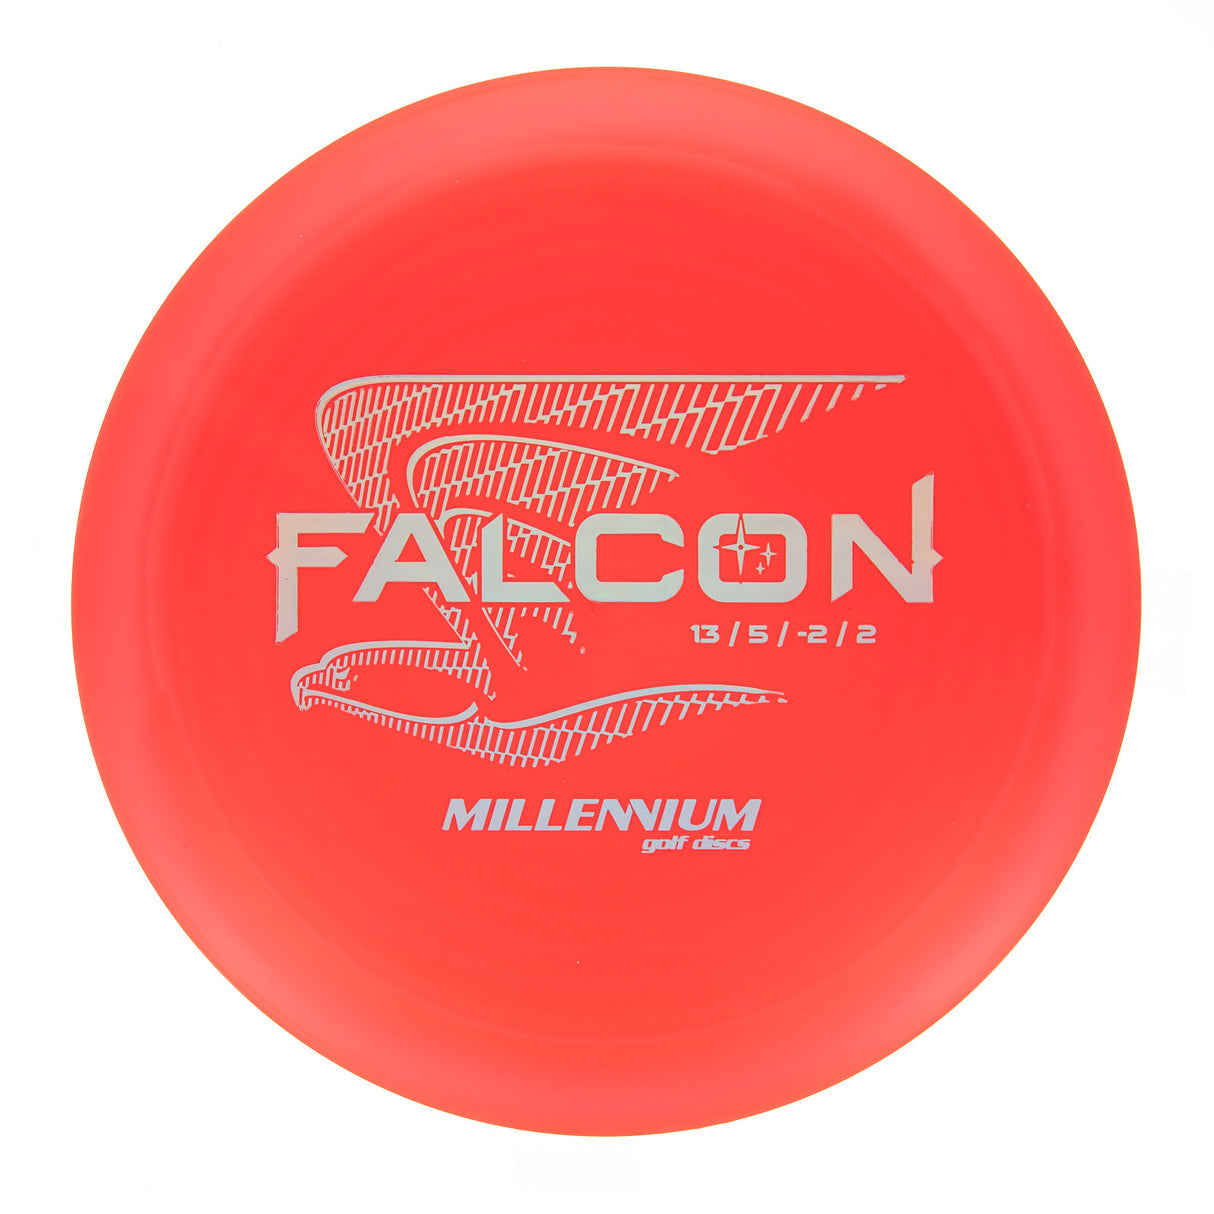 Millennium Falcon - Standard 170g | Style 0001